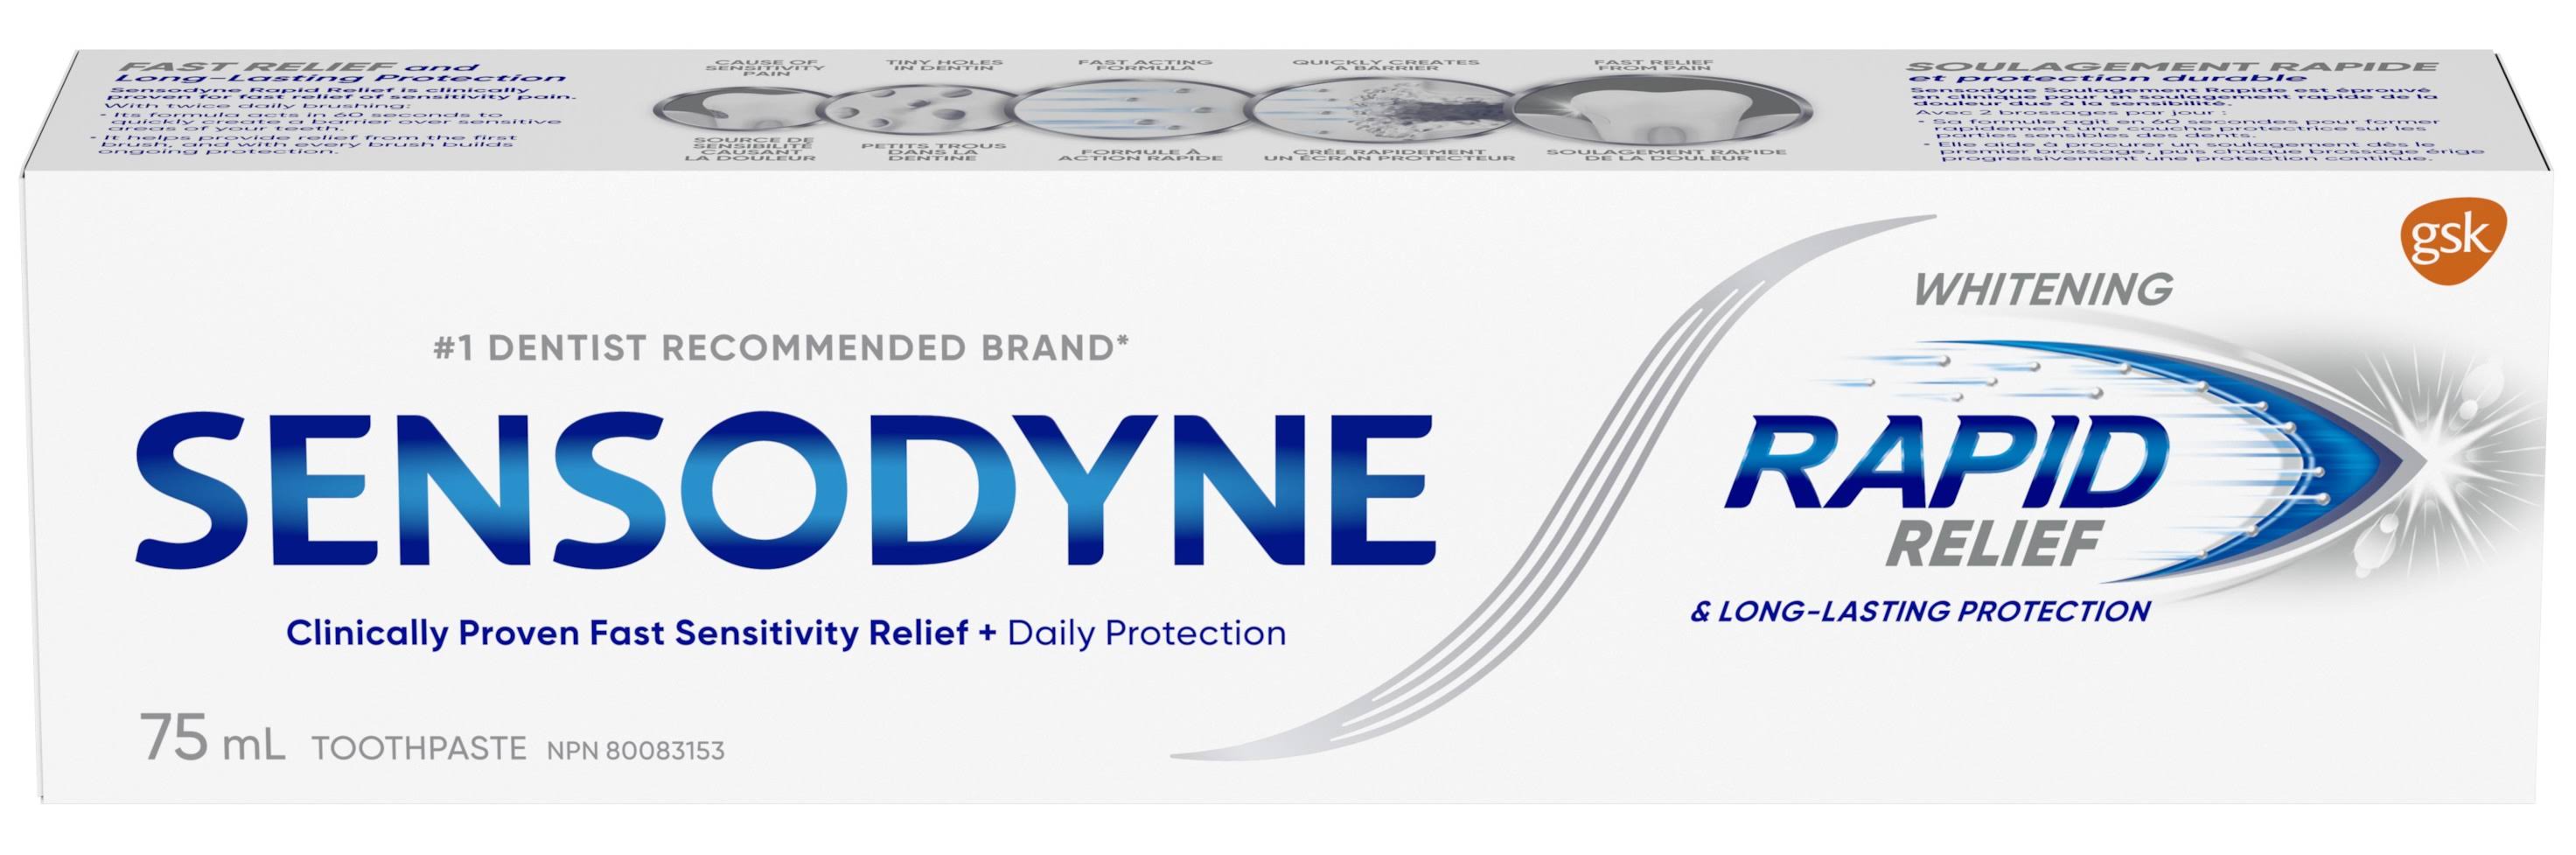 Sensodyne Rapid Relief Whitening Toothpaste - 75 ml